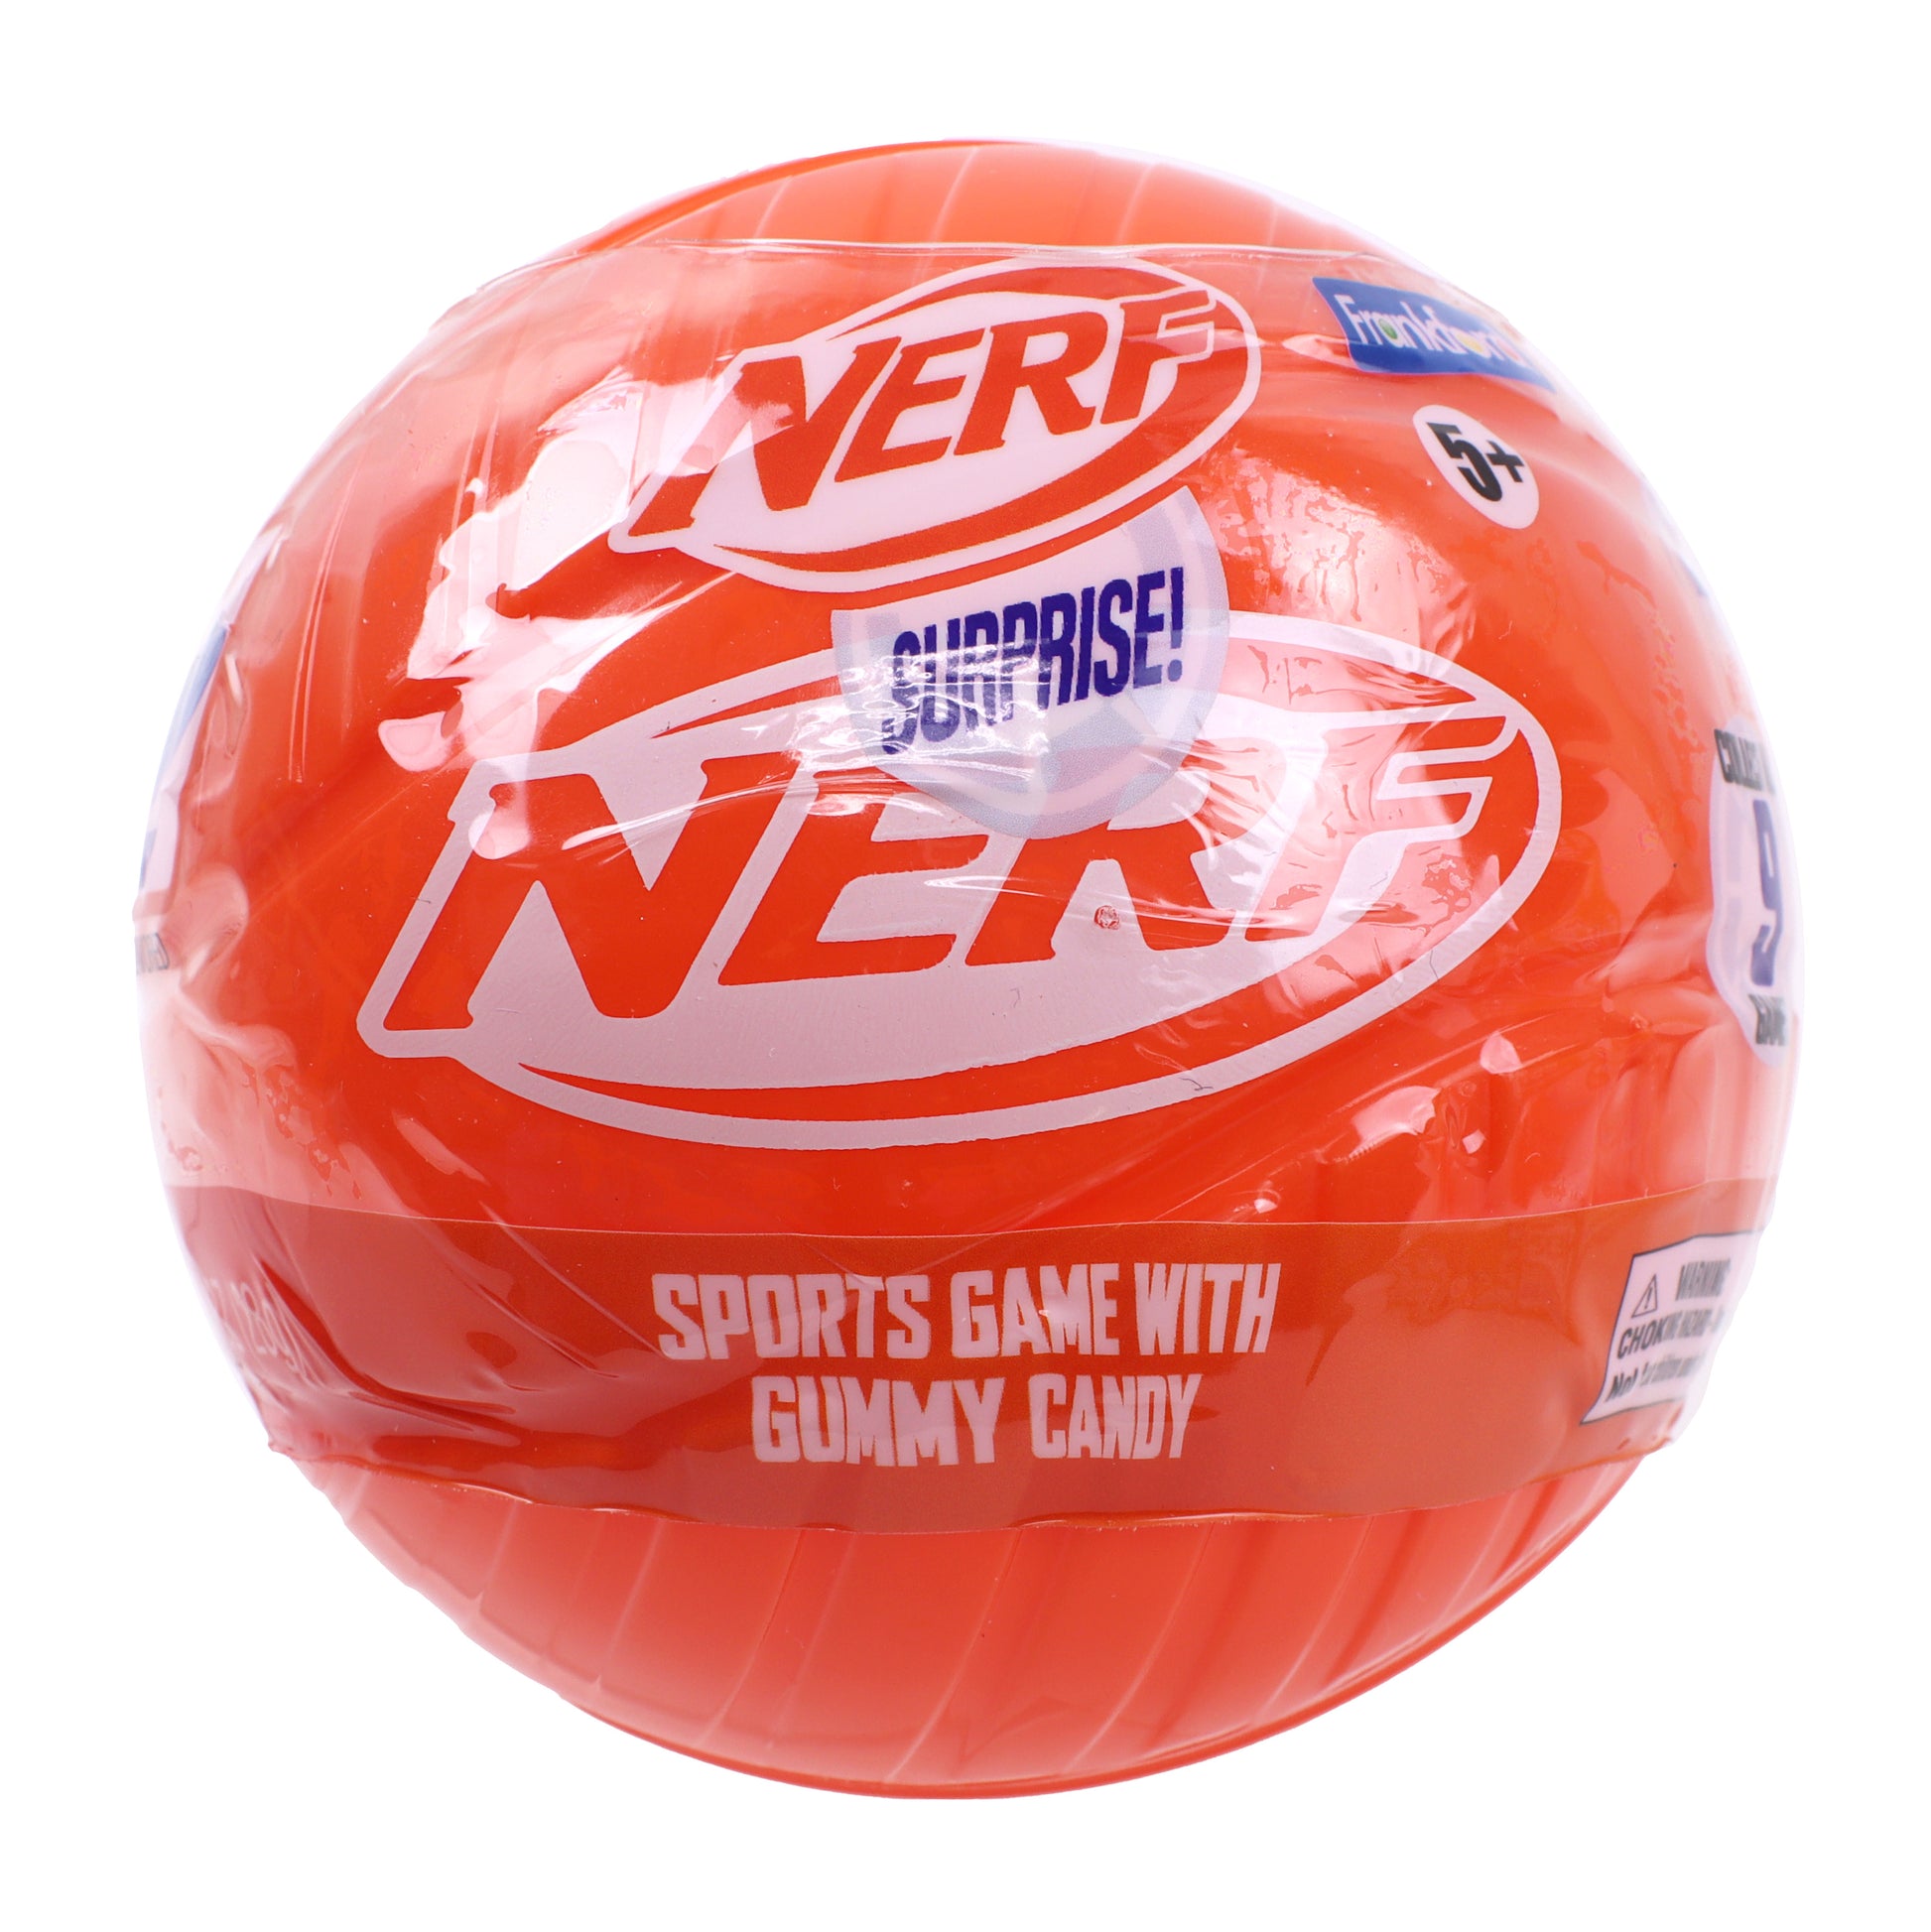 One orange NERF ball